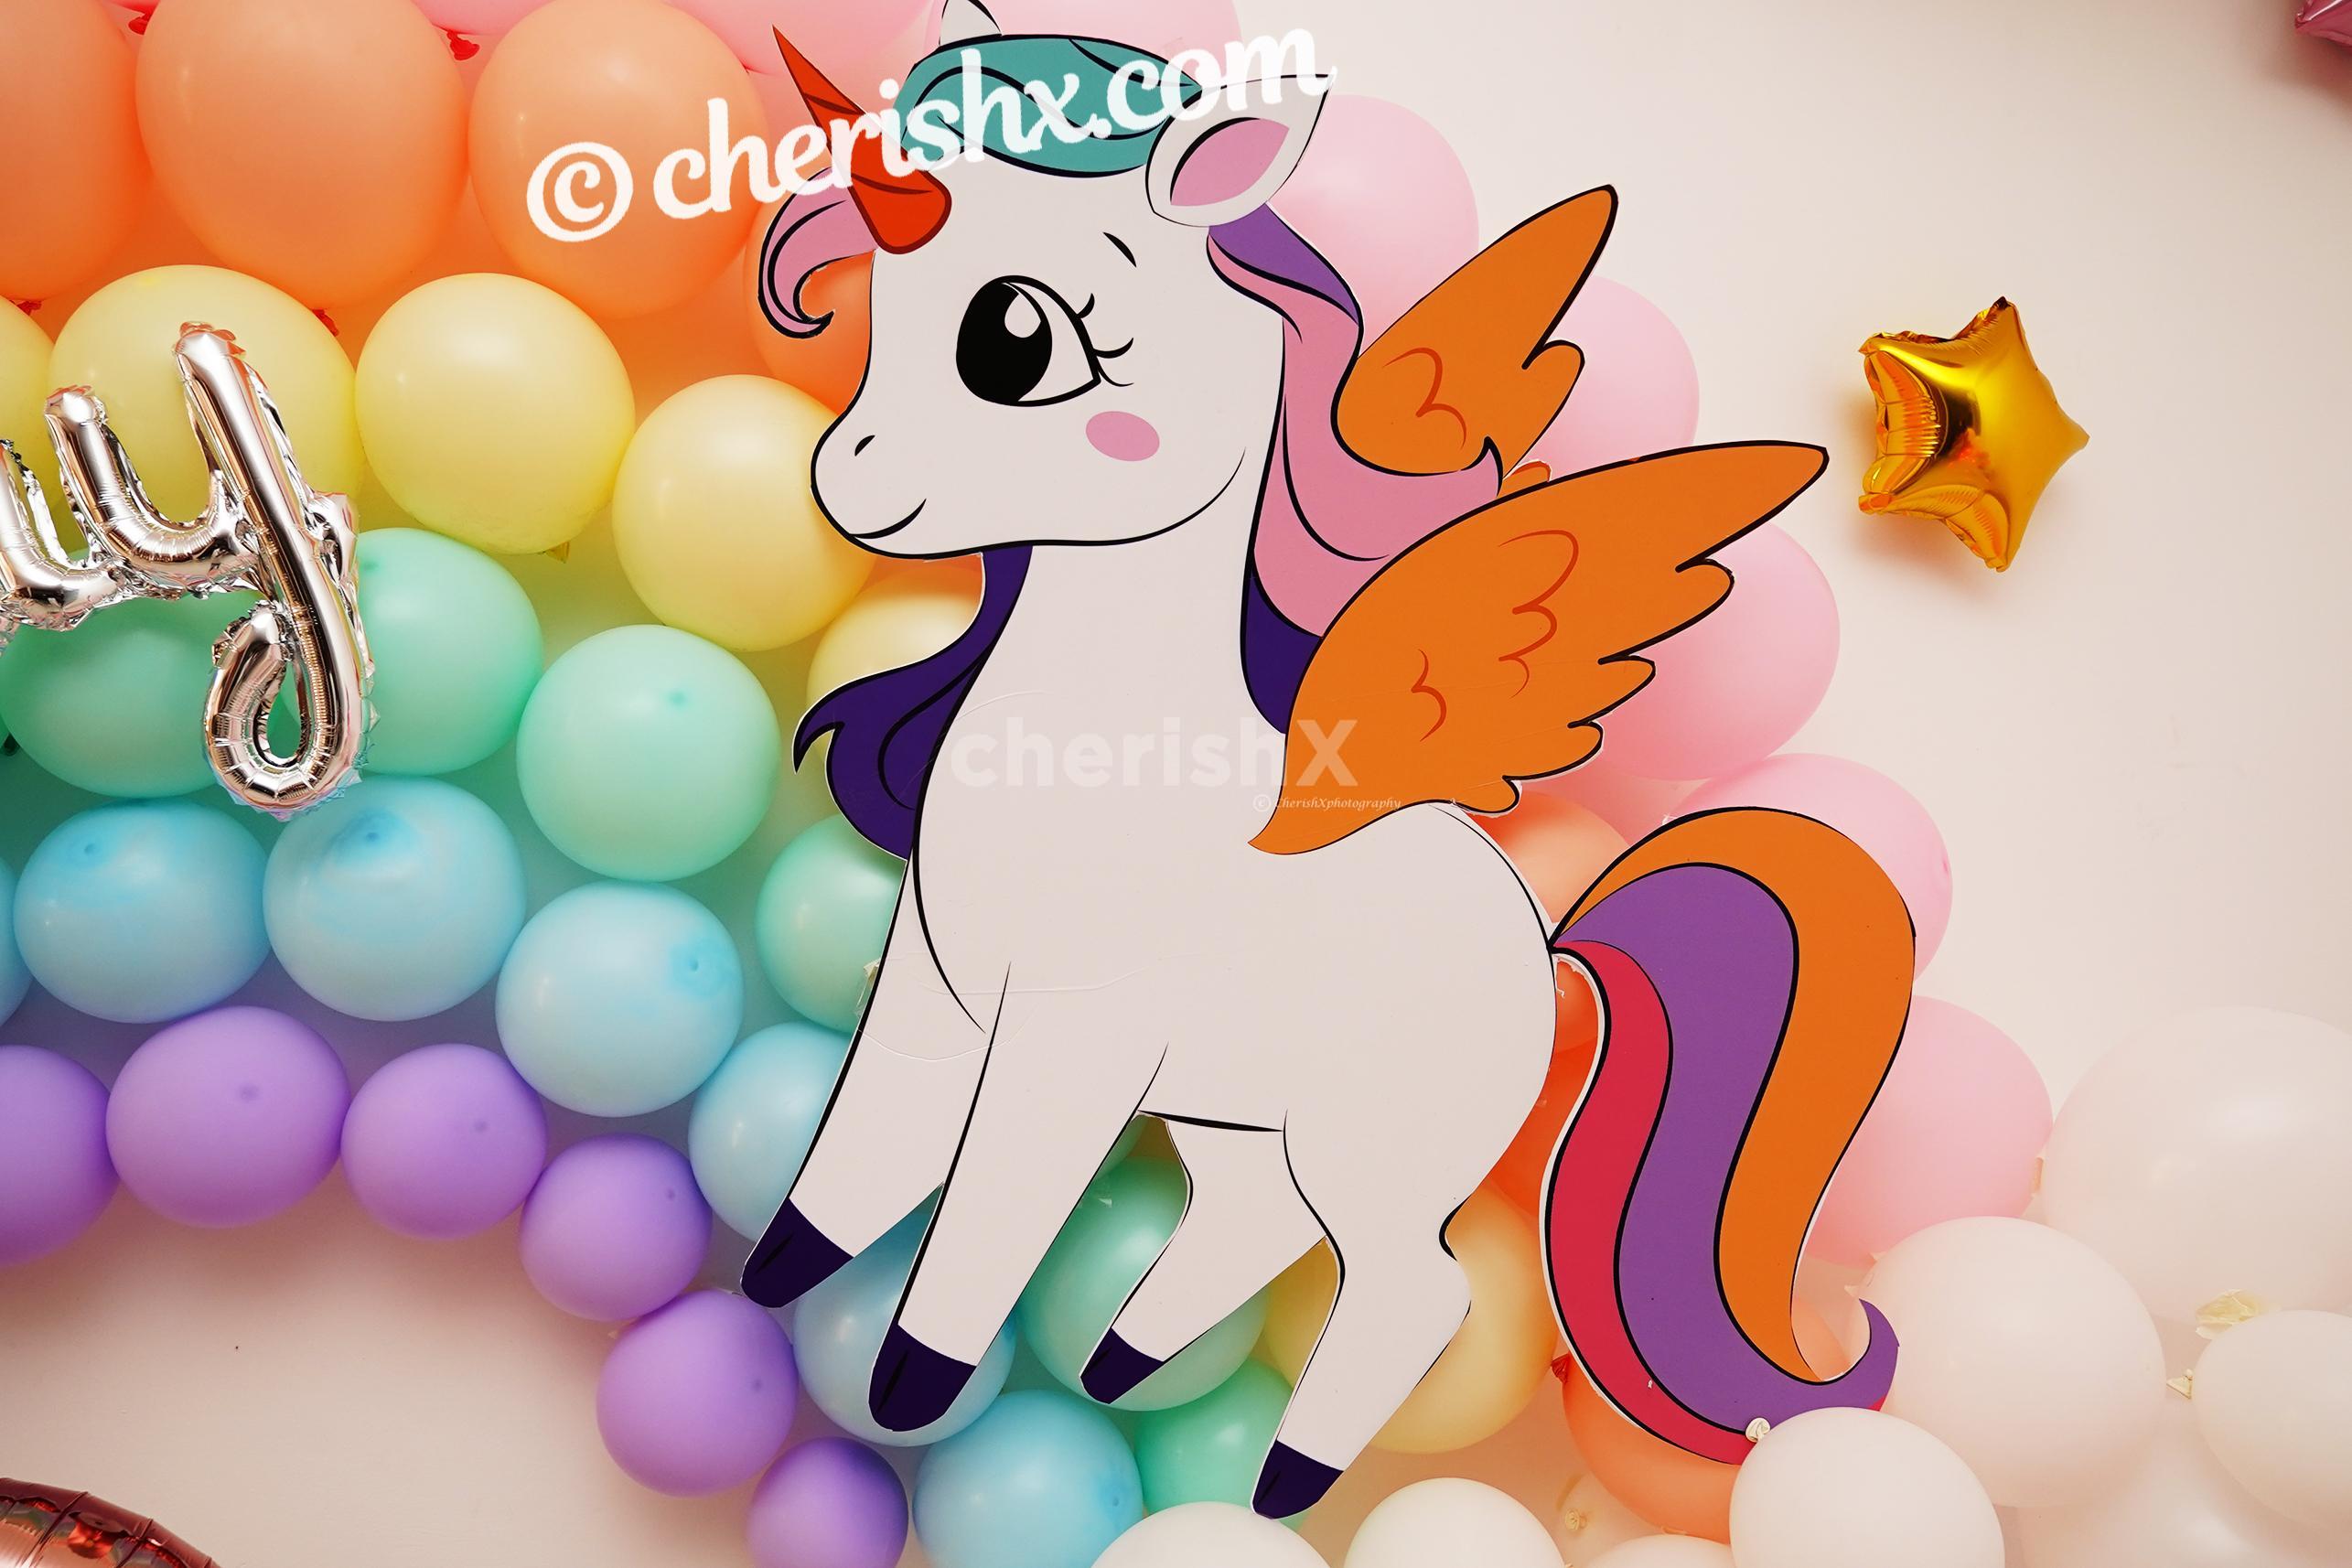 Make your child's birthday exciting by having Unicorn Birthday Theme Decor!